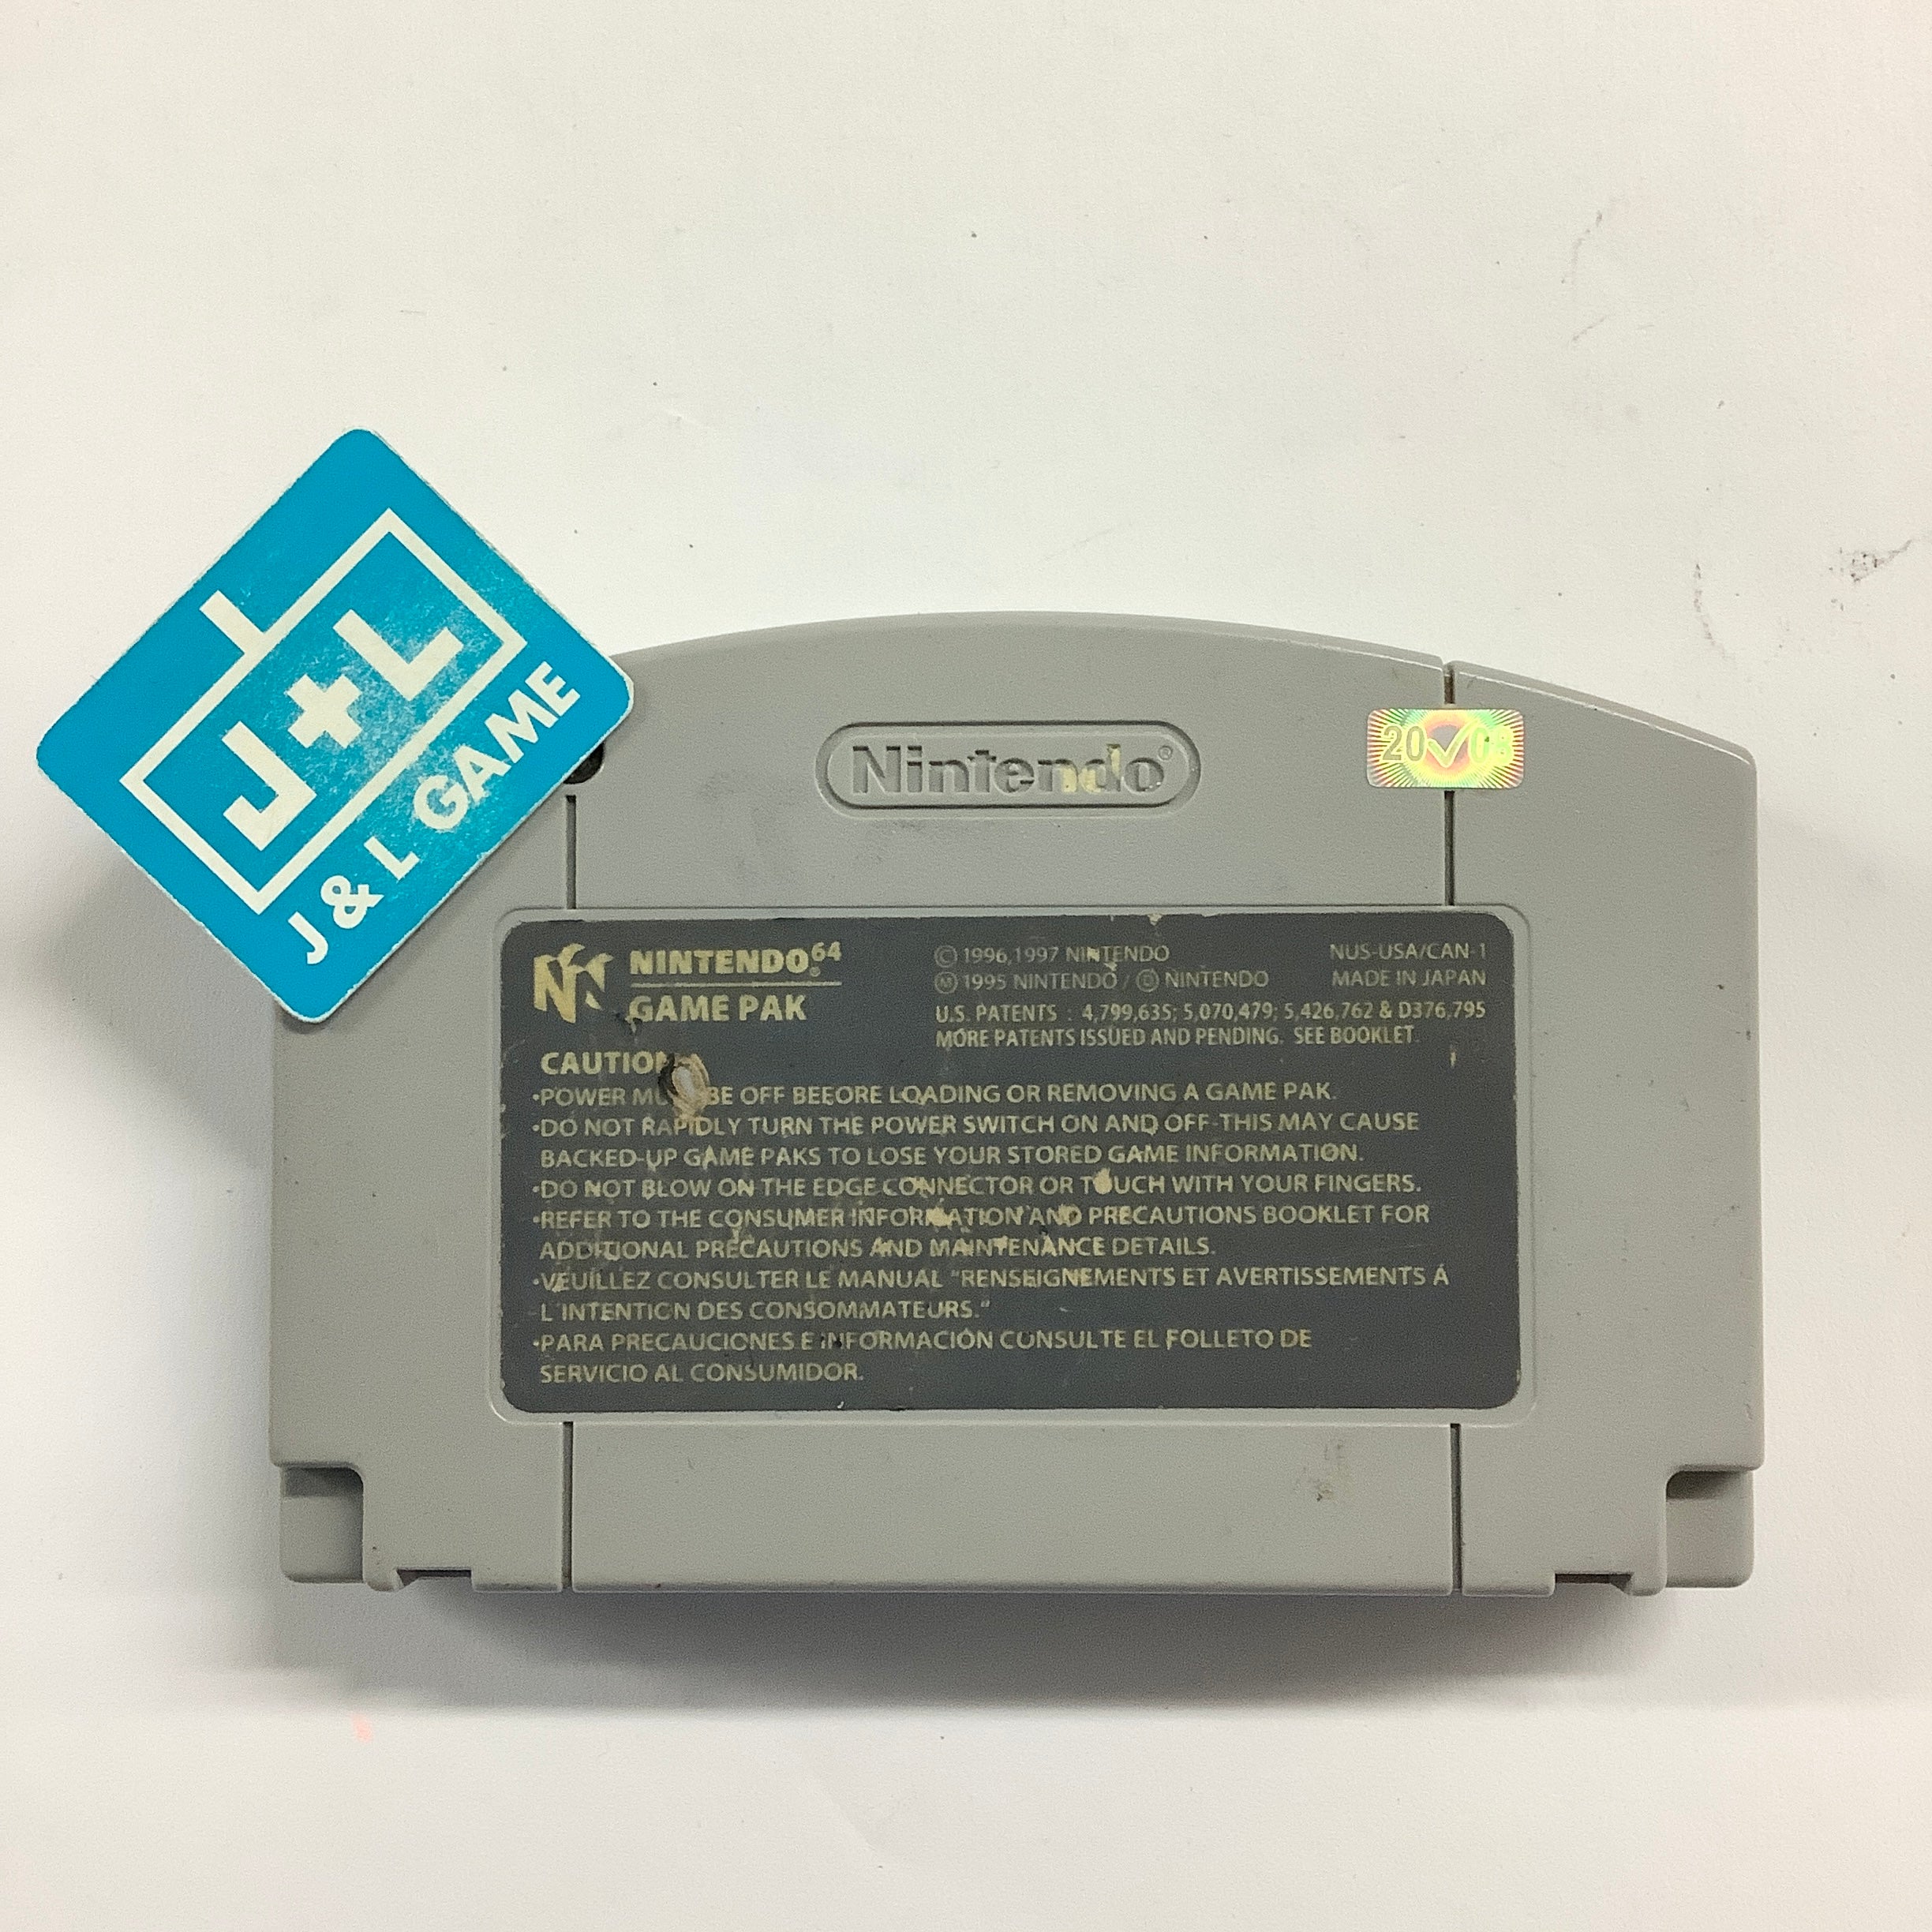 WWF War Zone - (N64) Nintendo 64 [Pre-Owned] Video Games Acclaim   